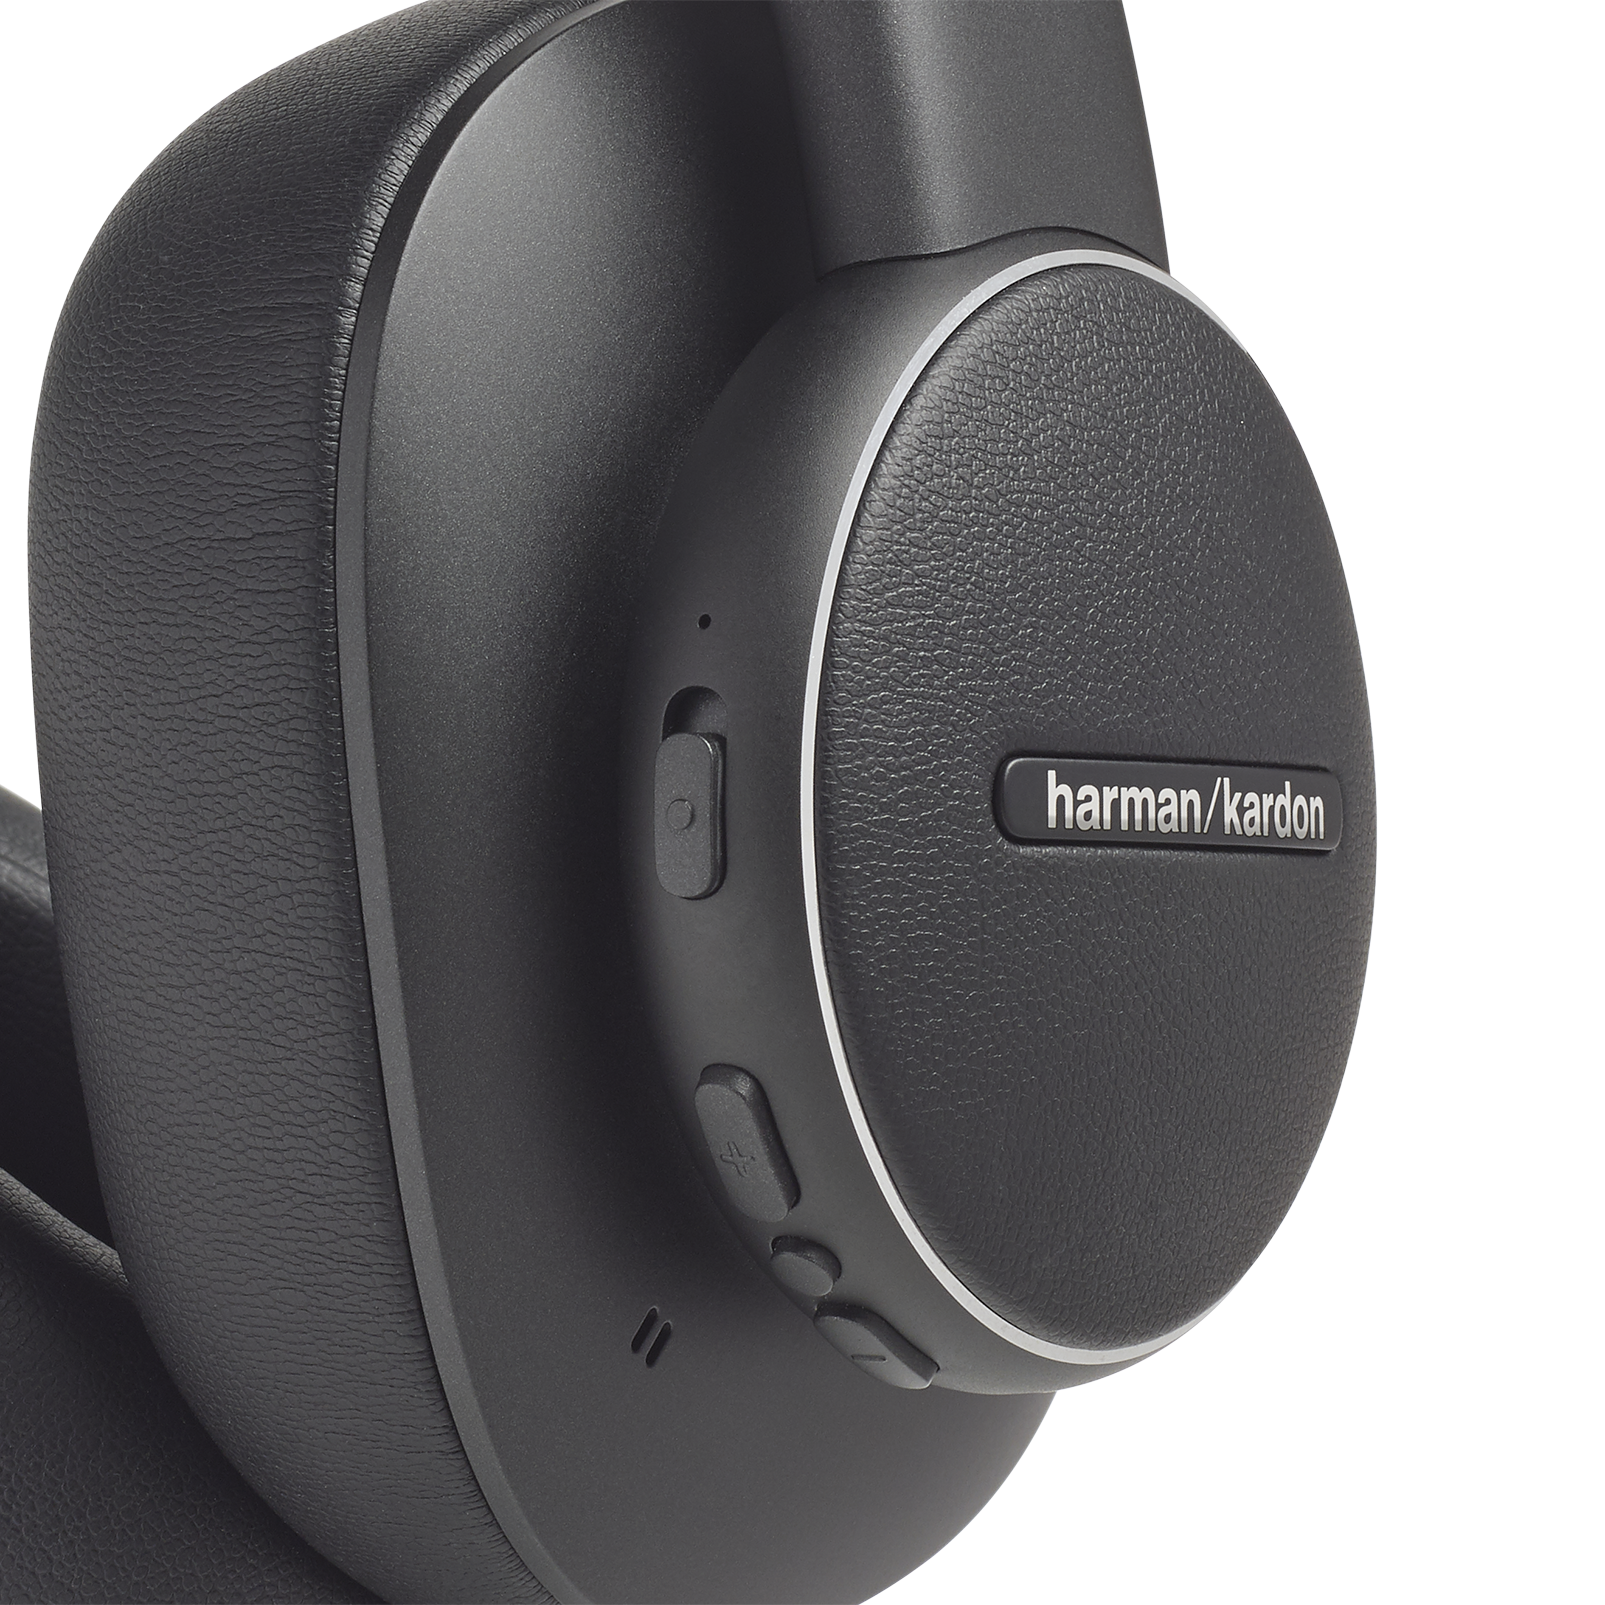 Harman Kardon FLY ANC - Black - Wireless Over-Ear NC Headphones - Detailshot 1